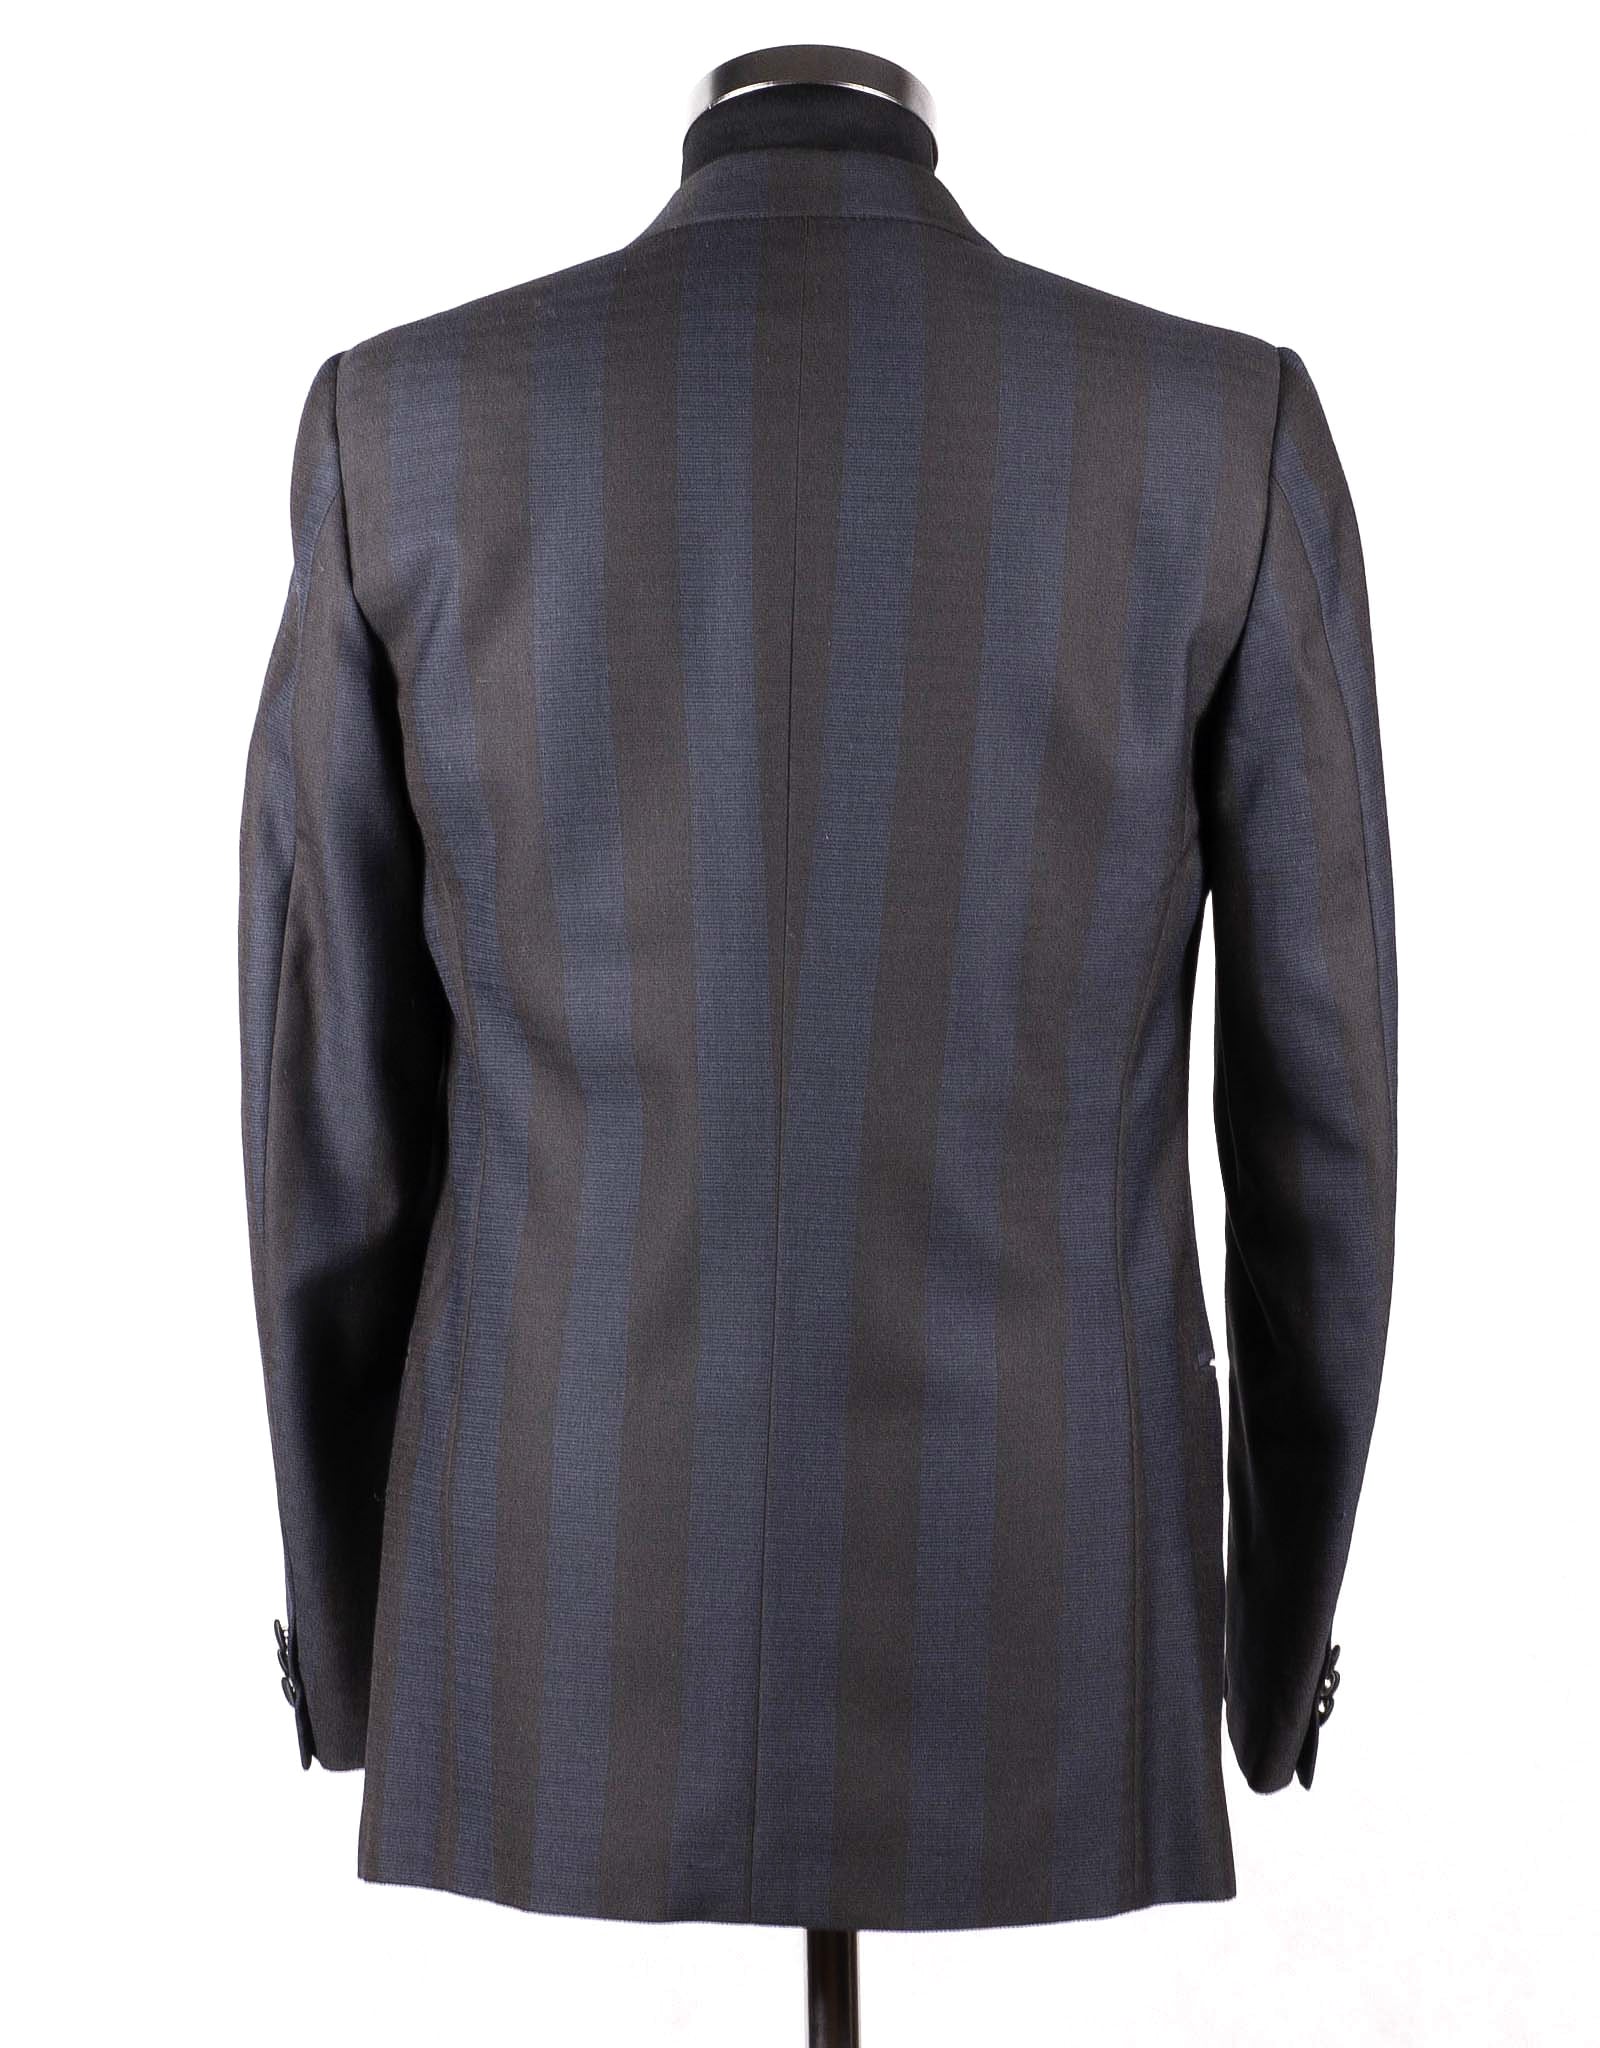 Yves Saint Laurent Block Stripe Tuxedo Jacket, US 36R, EU 46